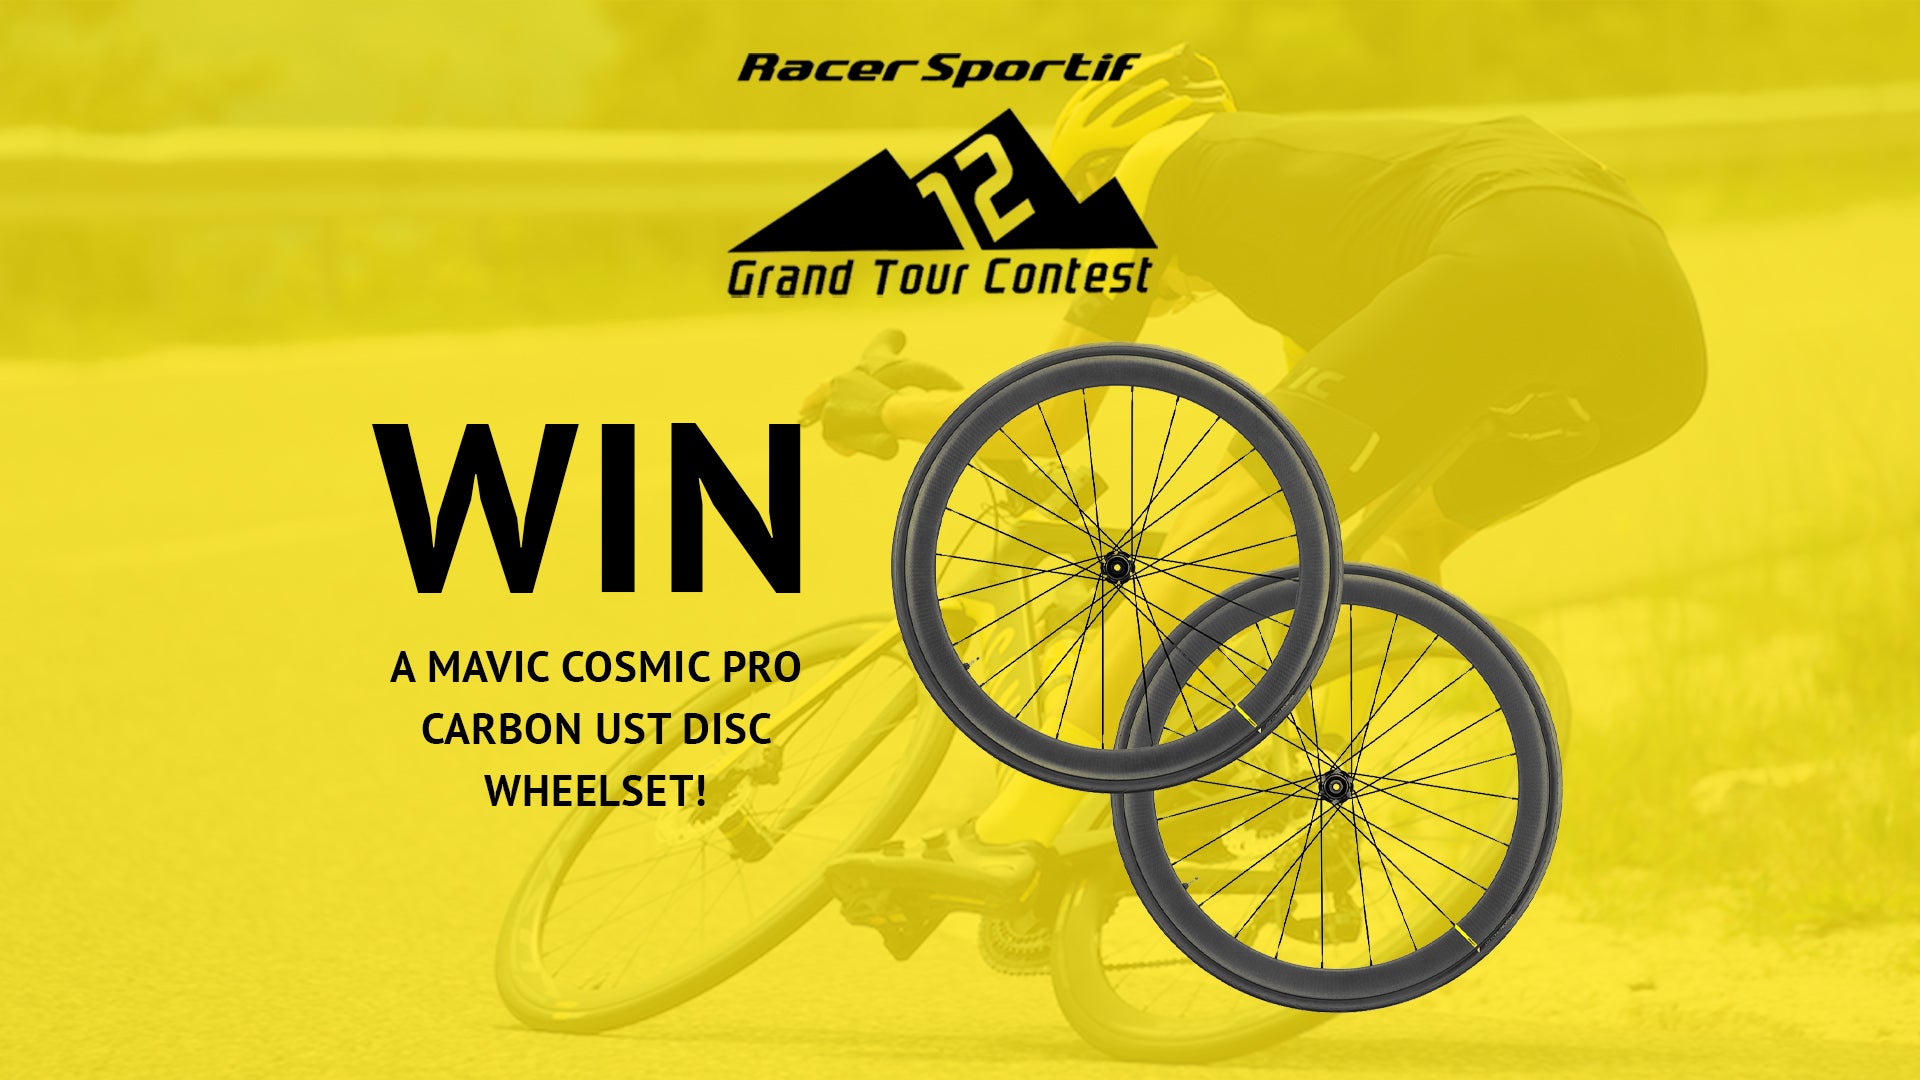 Win a Mavic cosmic pro carbon UST disc wheelset!